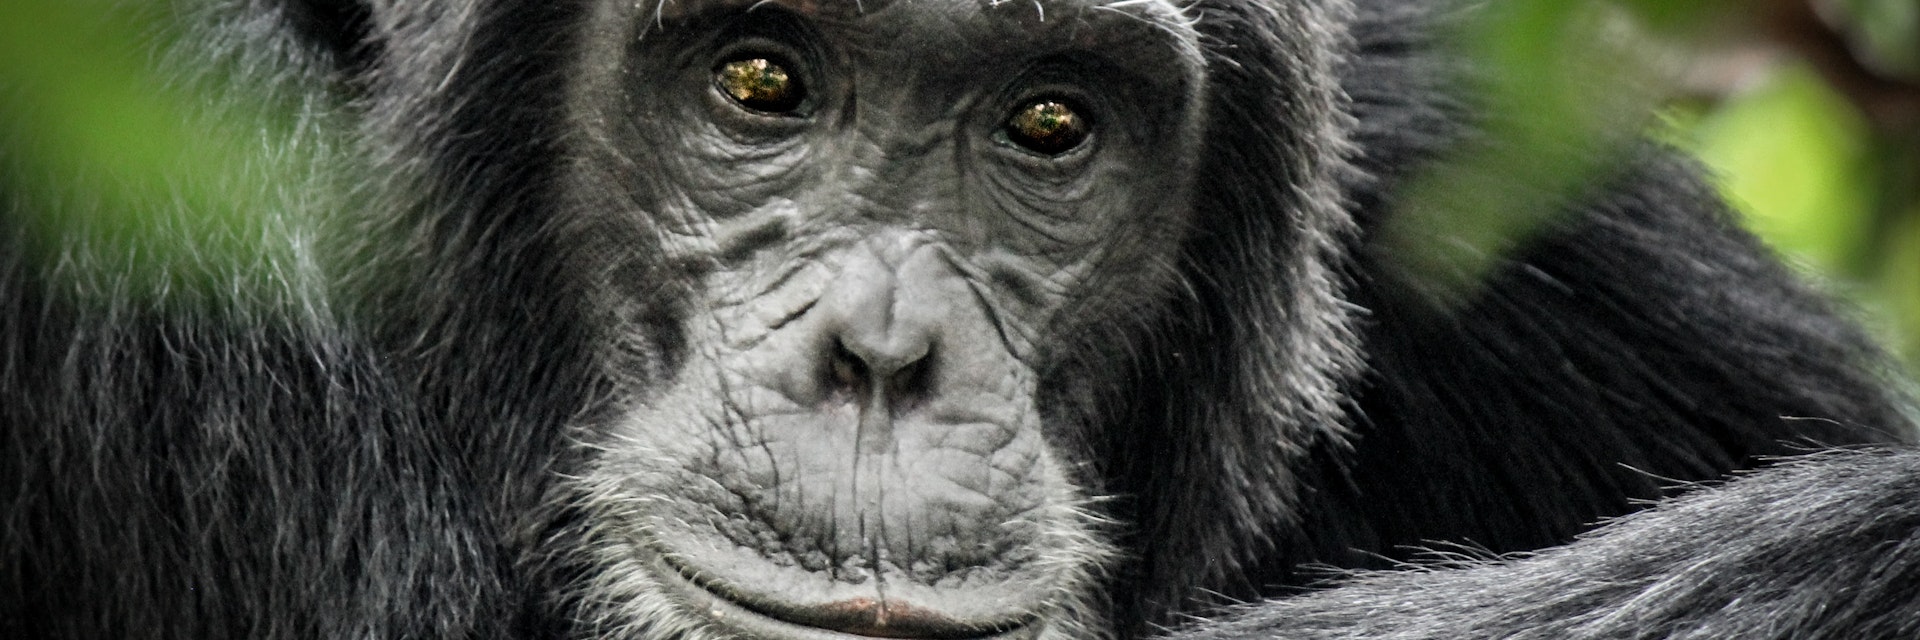 Common Chimpanzee - Scientific name - Pan troglodytes schweinfurtii portrait at Kibale Forest National Park, Rwenzori Mountains, Uganda, Africa
762814012
africa, african, ancestor, animal, ape, background, cantanhez, chimp, chimpansee, chimpanzee, congo, east, endangered, evolution, face, forest, gambia, gombe, human, hunting, jungle, kenya, kibale, mahale mountains, mammal, monkey, national, nature, nyungwe, pan, paniscus, park, portrait, research, reserve, rubondo, schweinfurthii, scientific, sitting, species, stream, tanzania, toolmaking, tourism, trekking, troglodytes, uganda, virunga, wild, wildlife